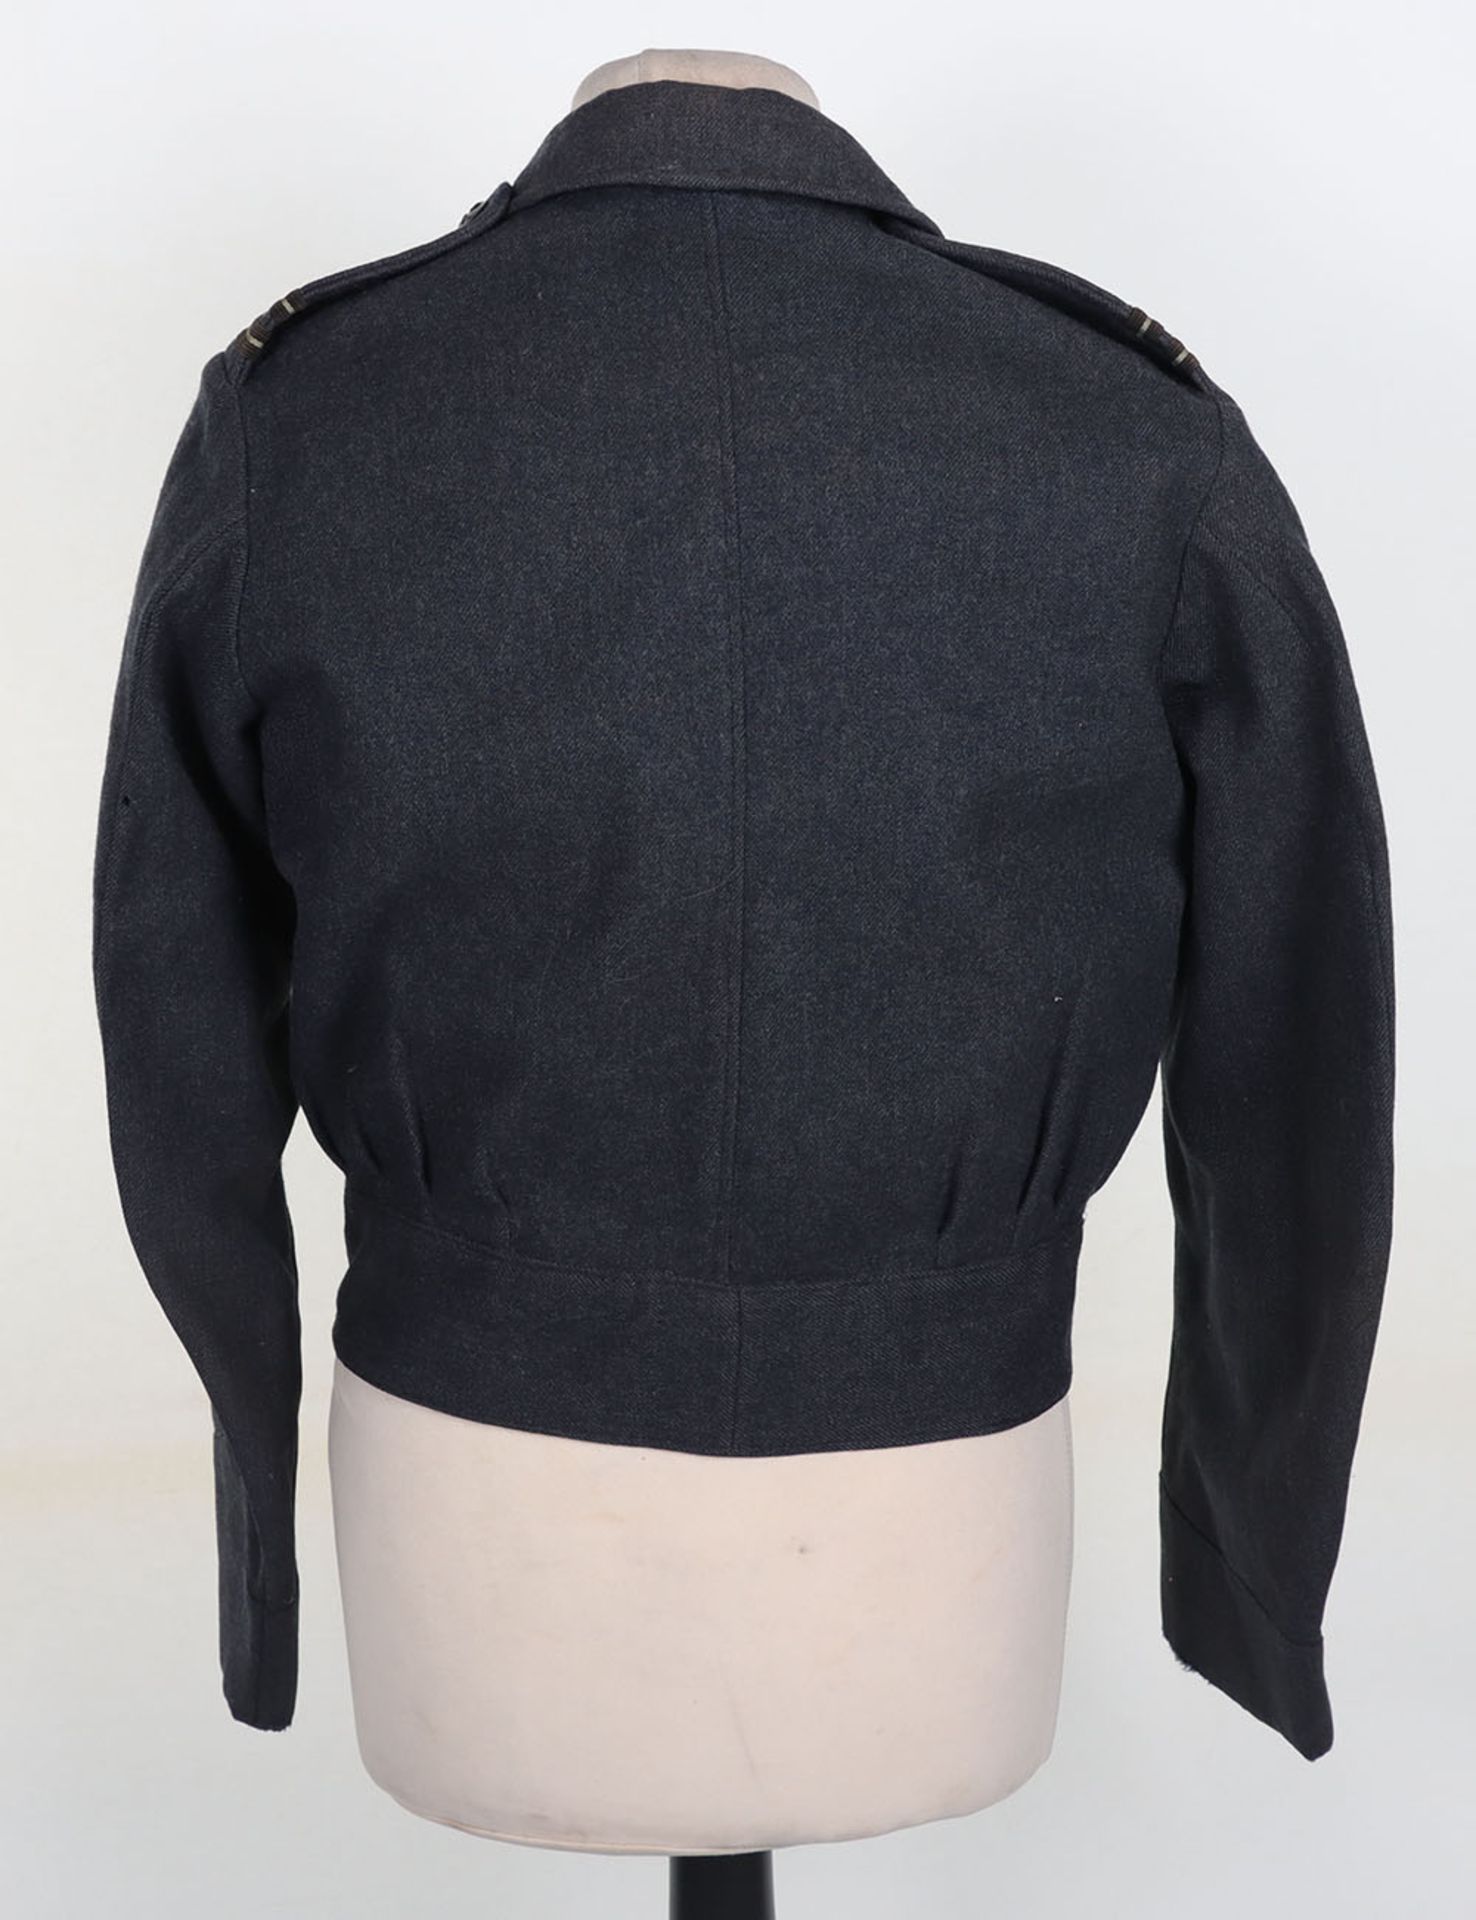 Post WW2 Royal Air Force Pilots Battle Dress Blouse - Image 6 of 8